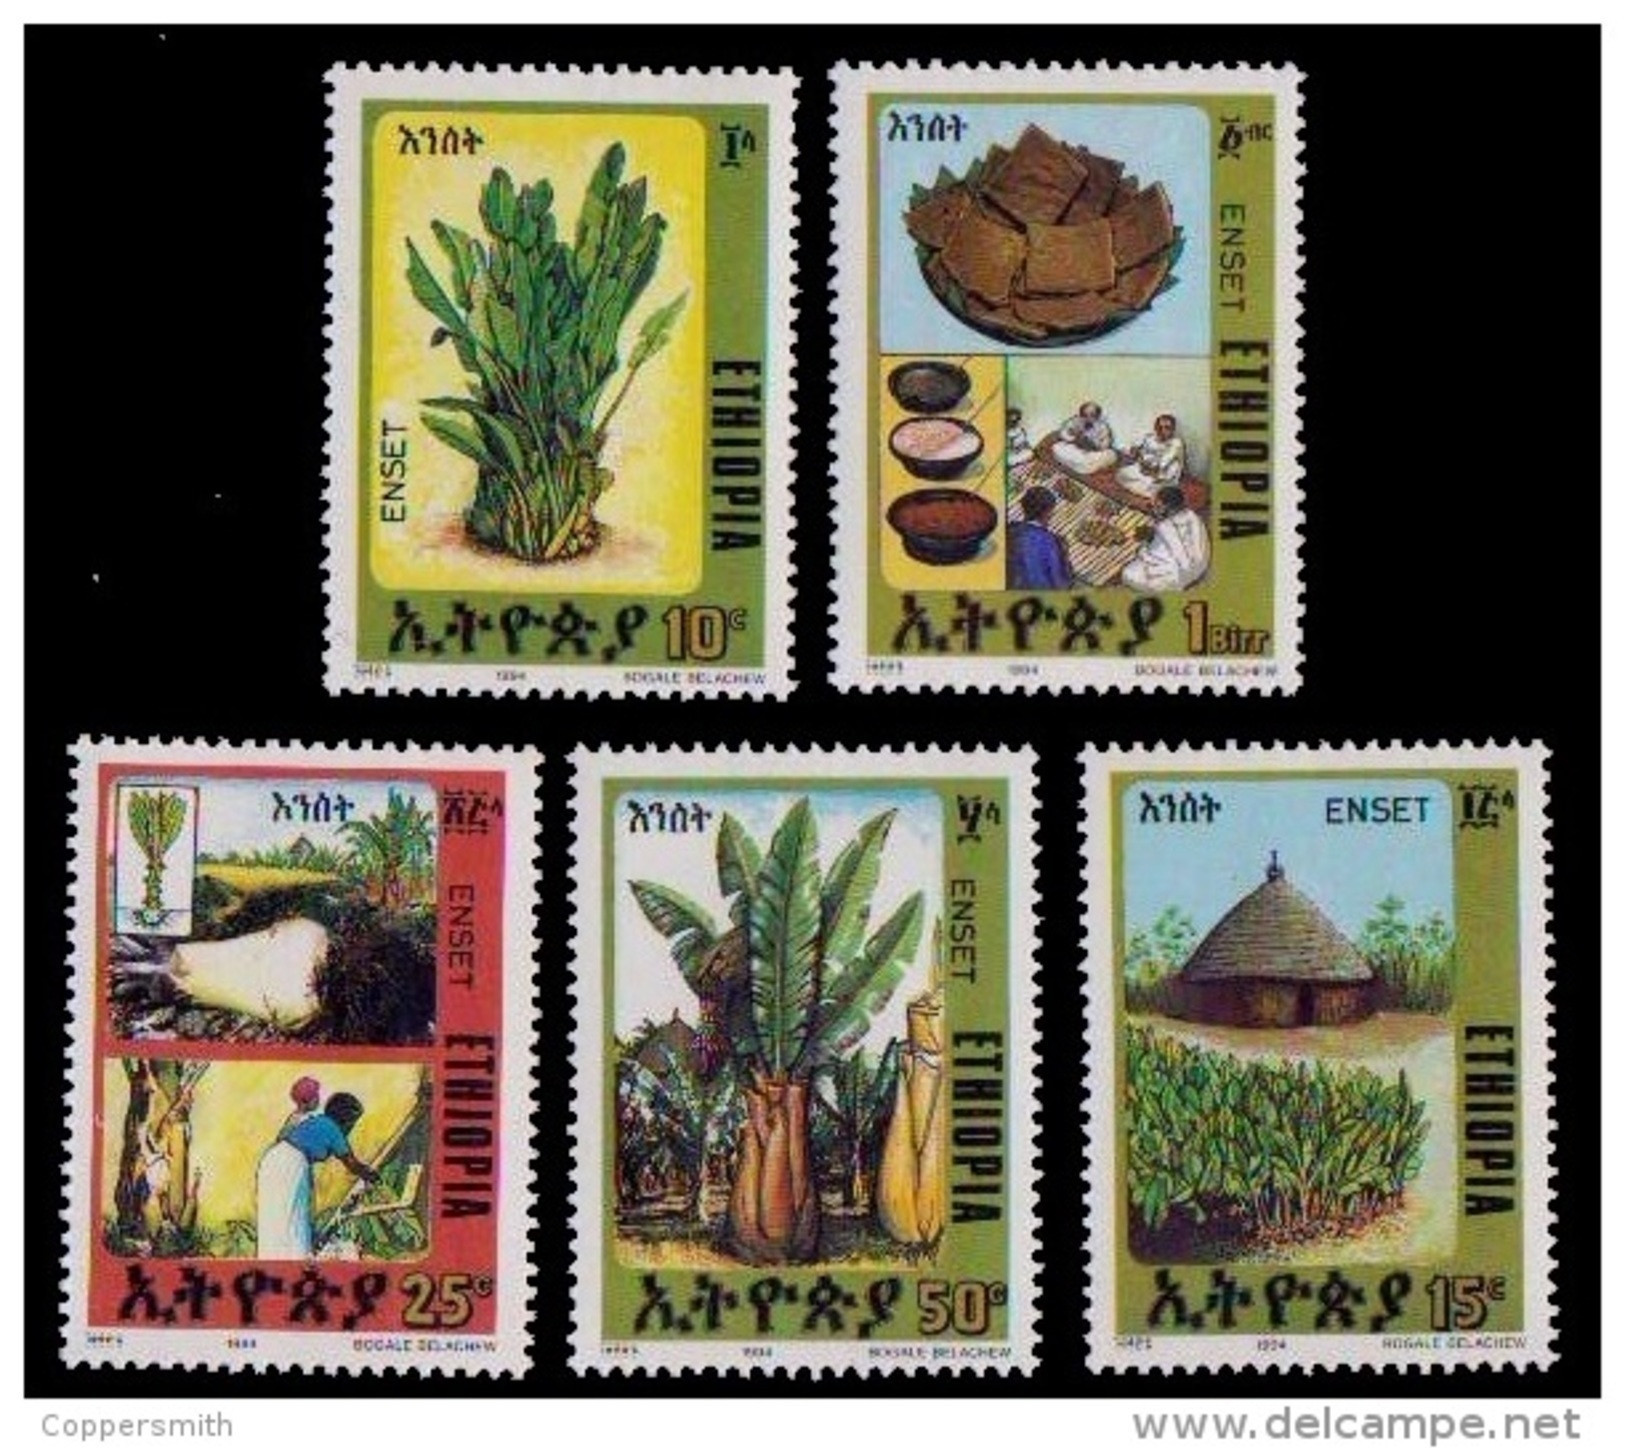 (356) Ethiopia / Ethiopie  Plants / Flora / Fruits / Bananas / Früchte / 1994 ** / Mnh  Michel 1477-81 - Ethiopie